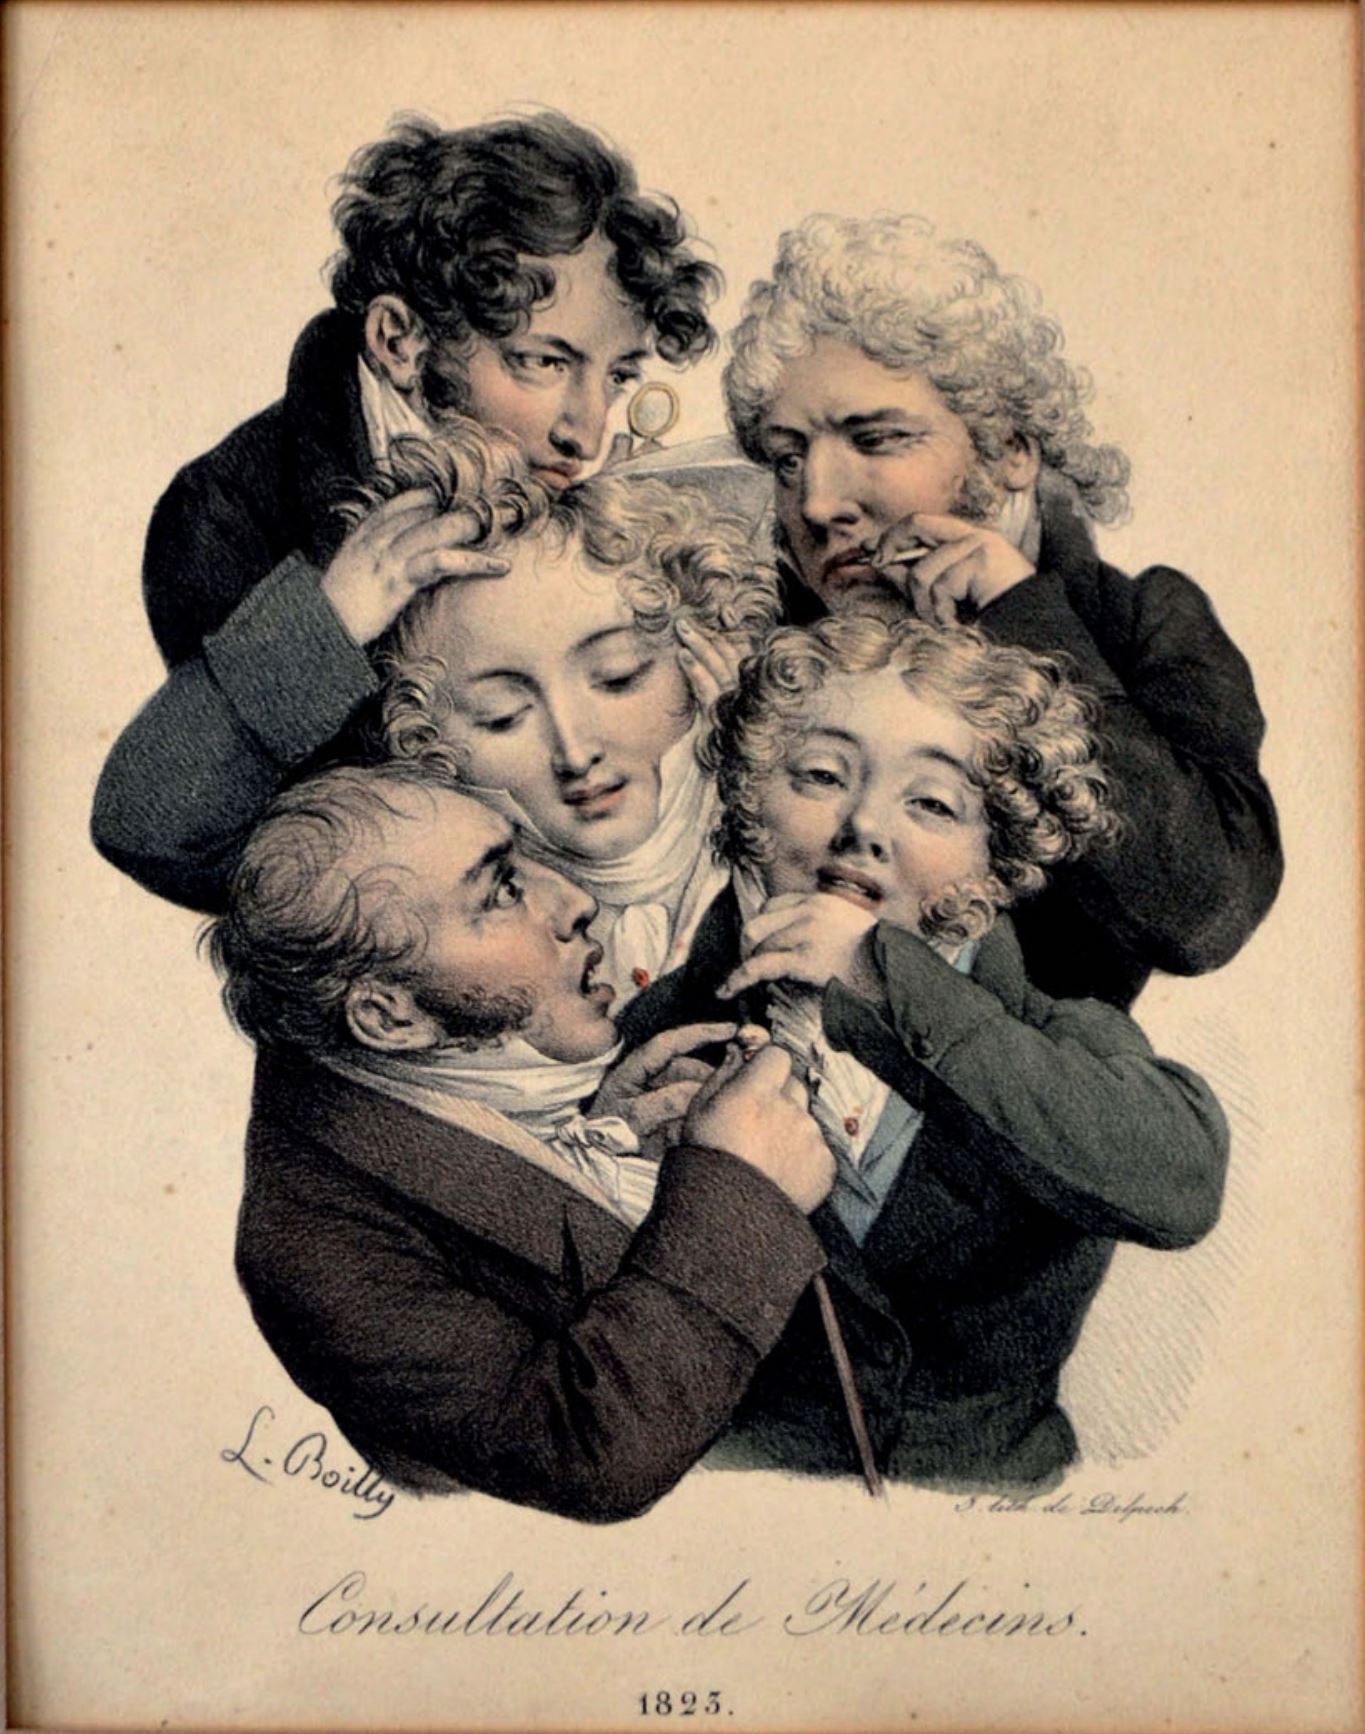 Boilly 1823 Consultation des medecins 1723 Les grimaces